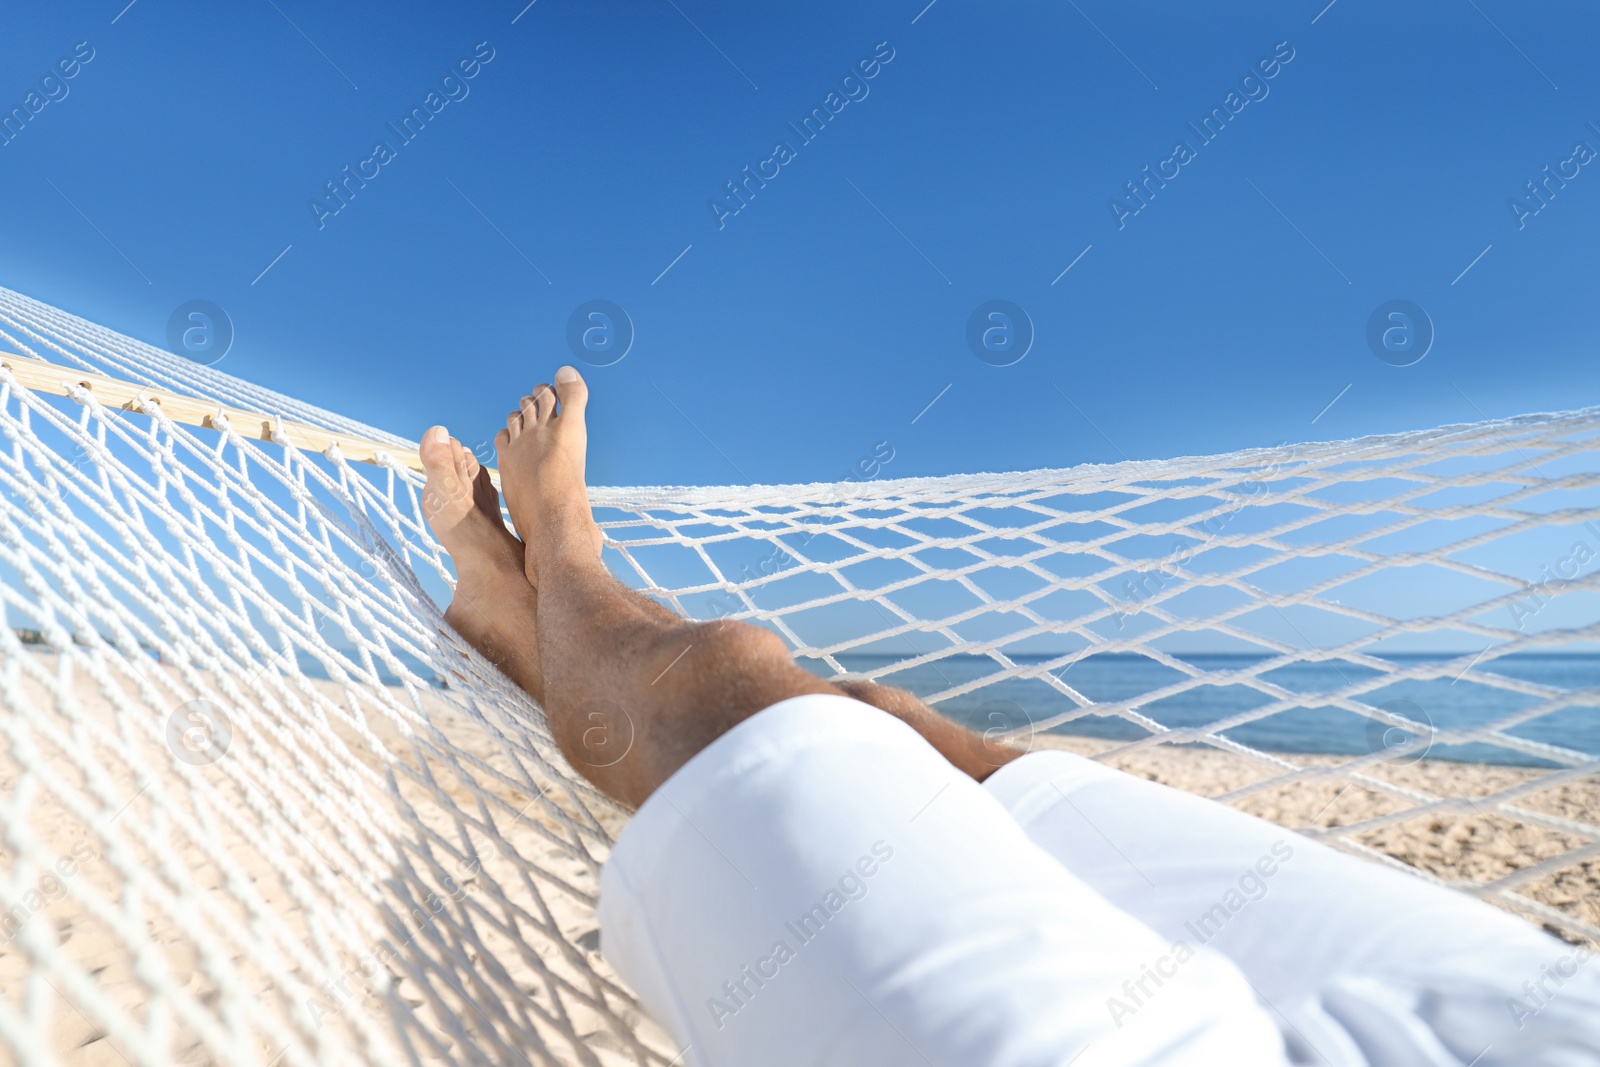 Photo of Man relaxing in hammock on beach, closeup